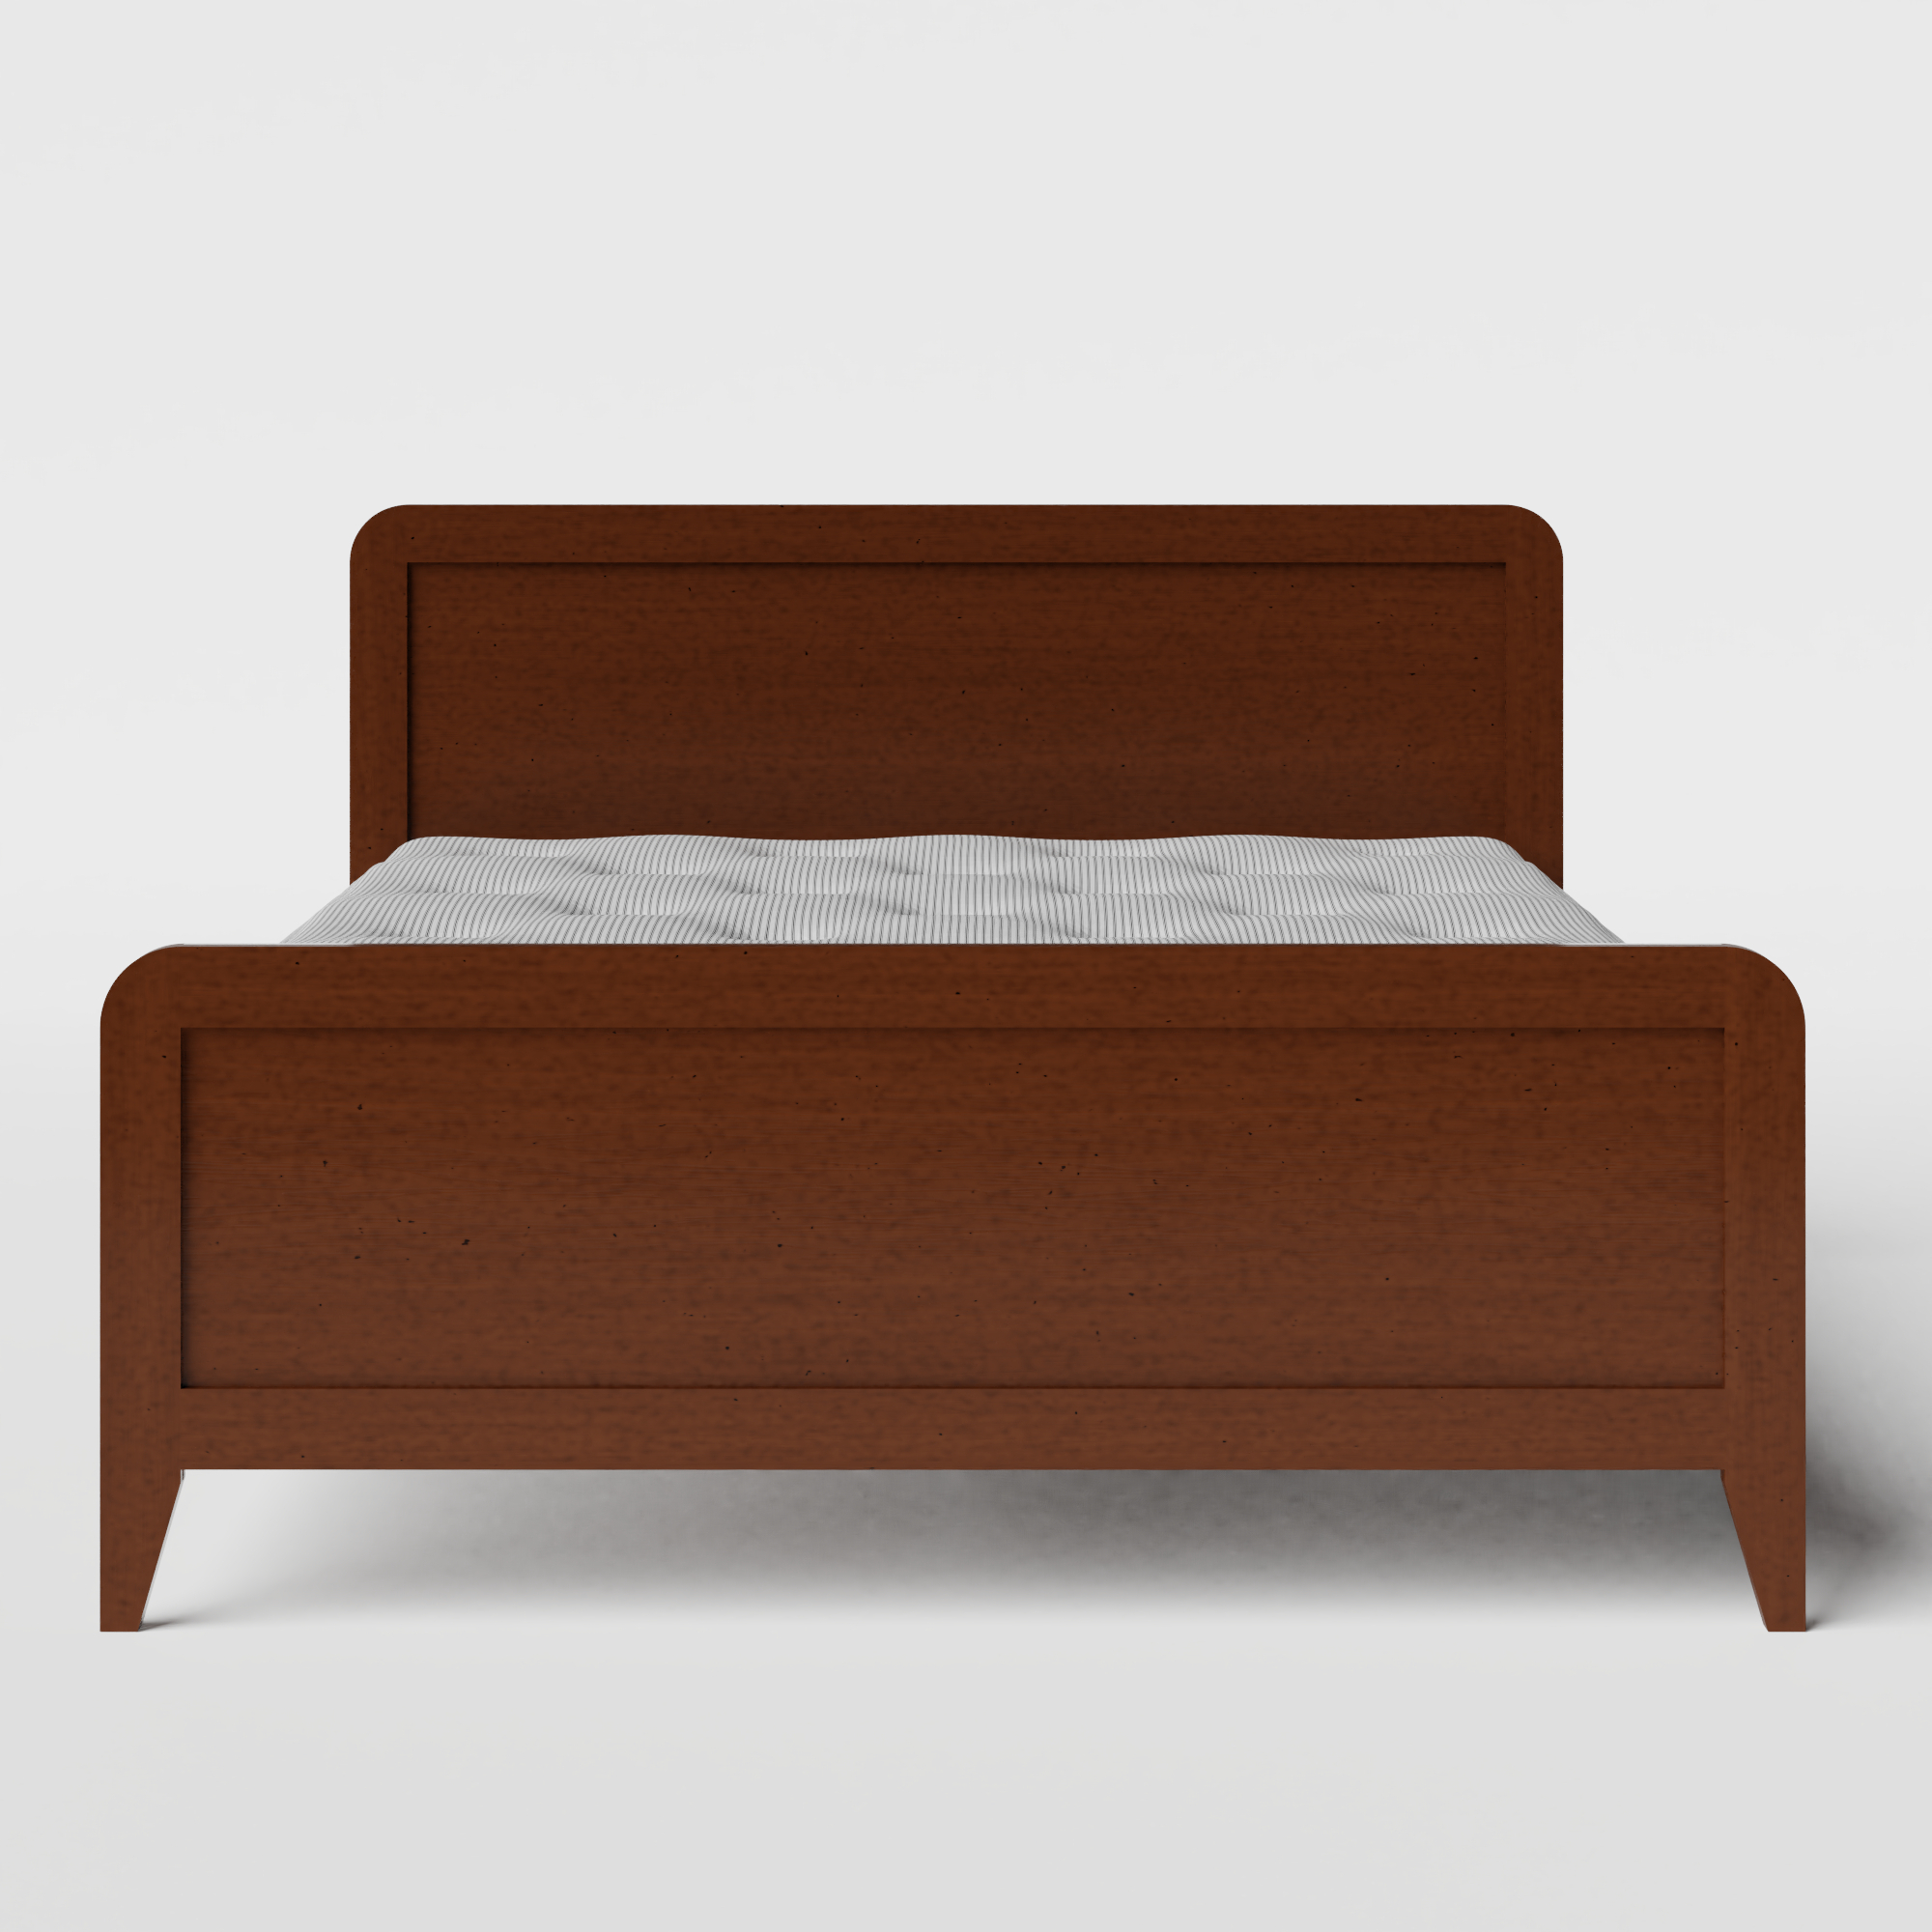 Keats wood bed in dark cherry with Juno mattress